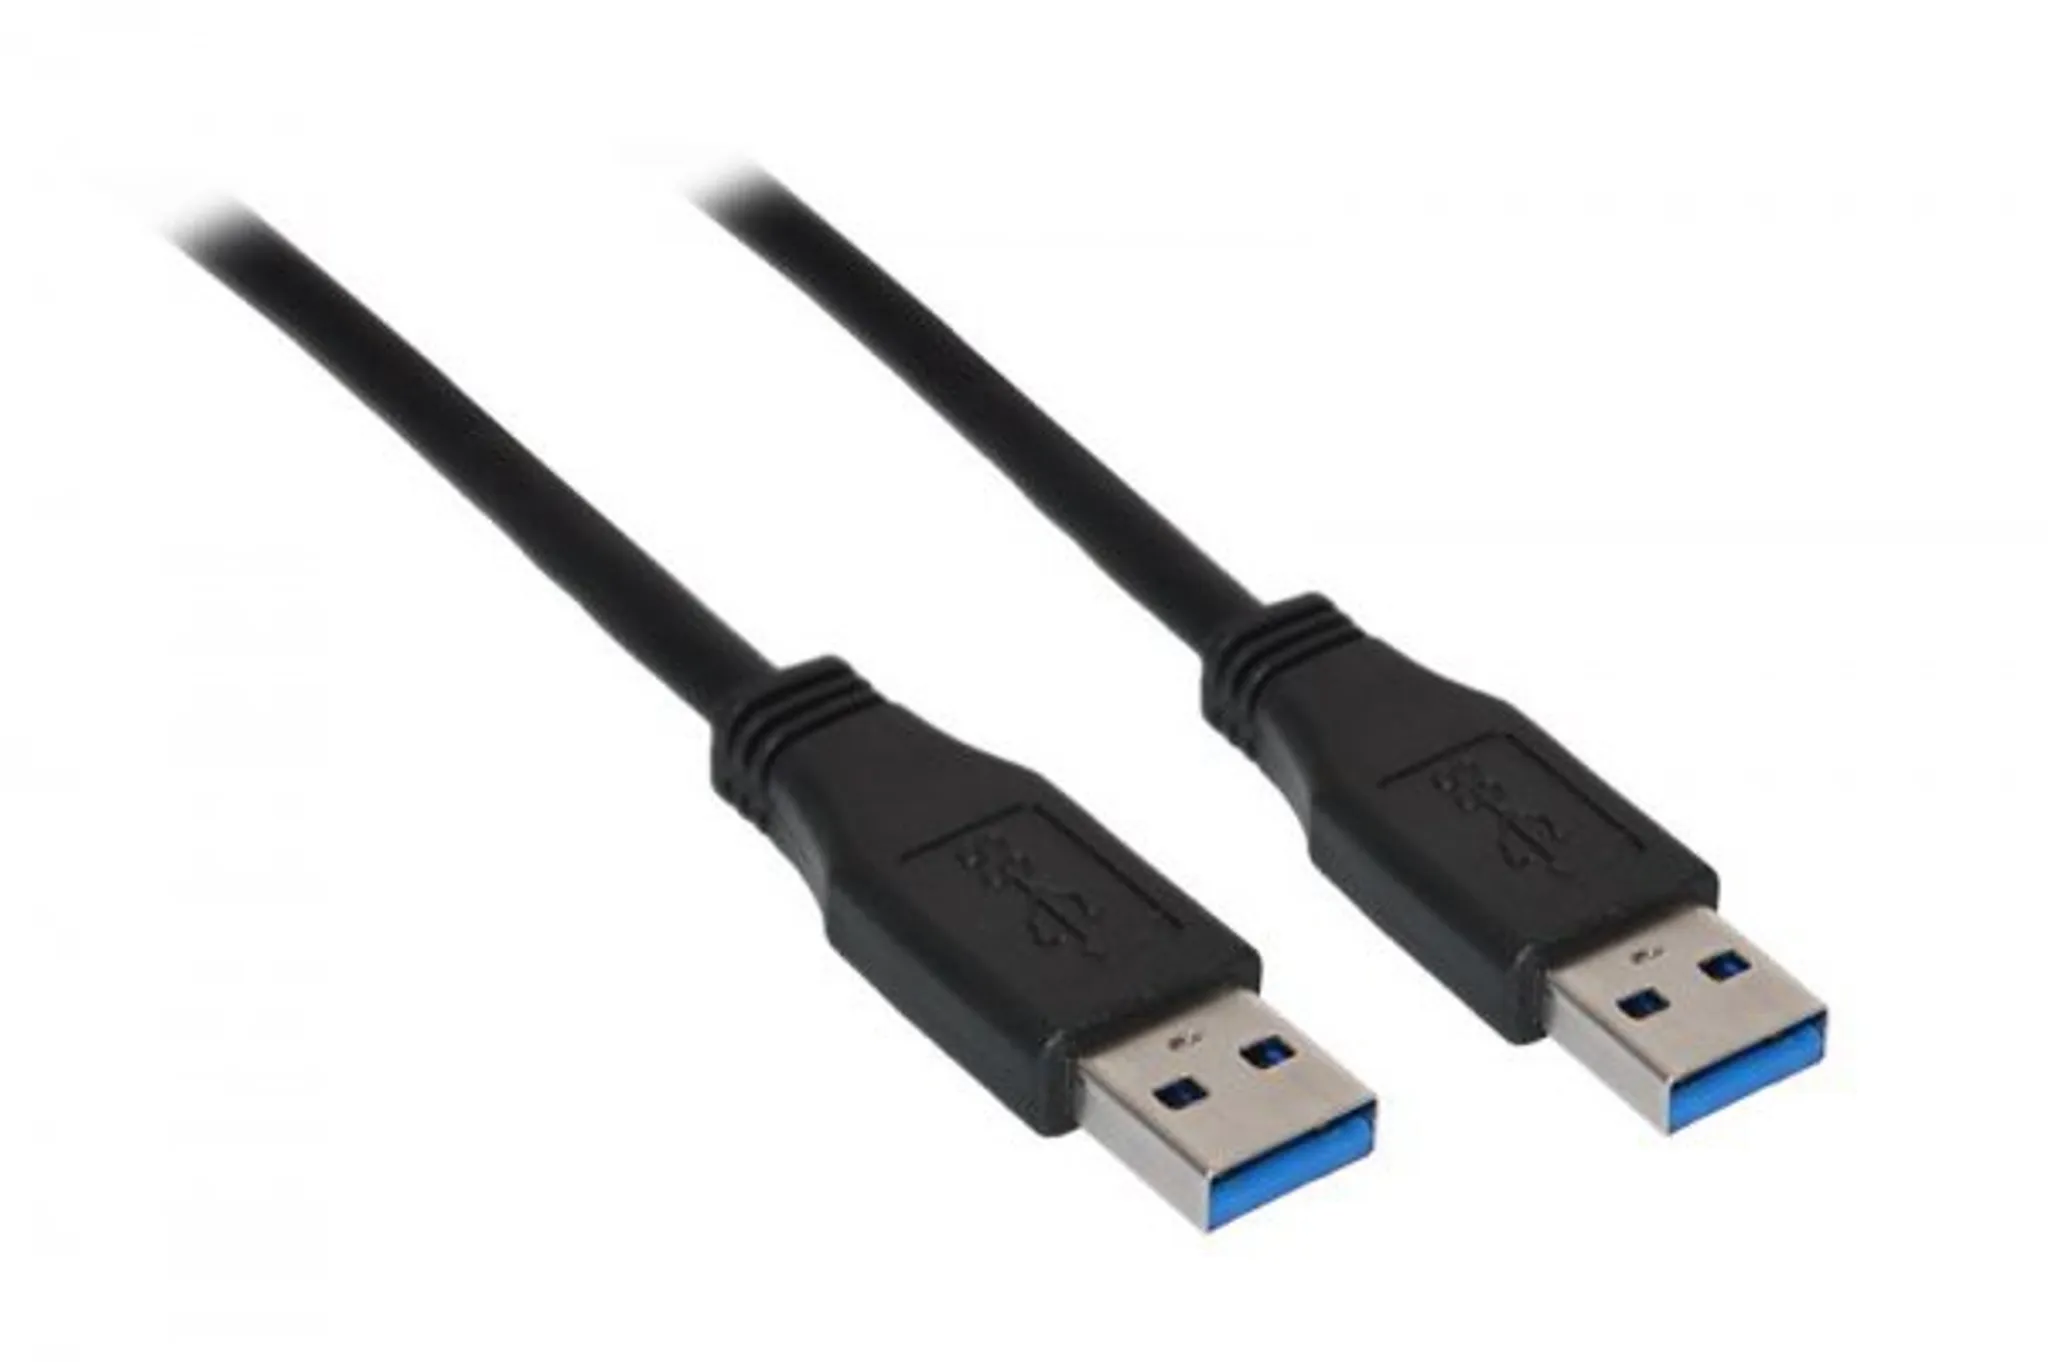 1m) USB A auf USB 3.0 A Verlängerungskabel - Grau